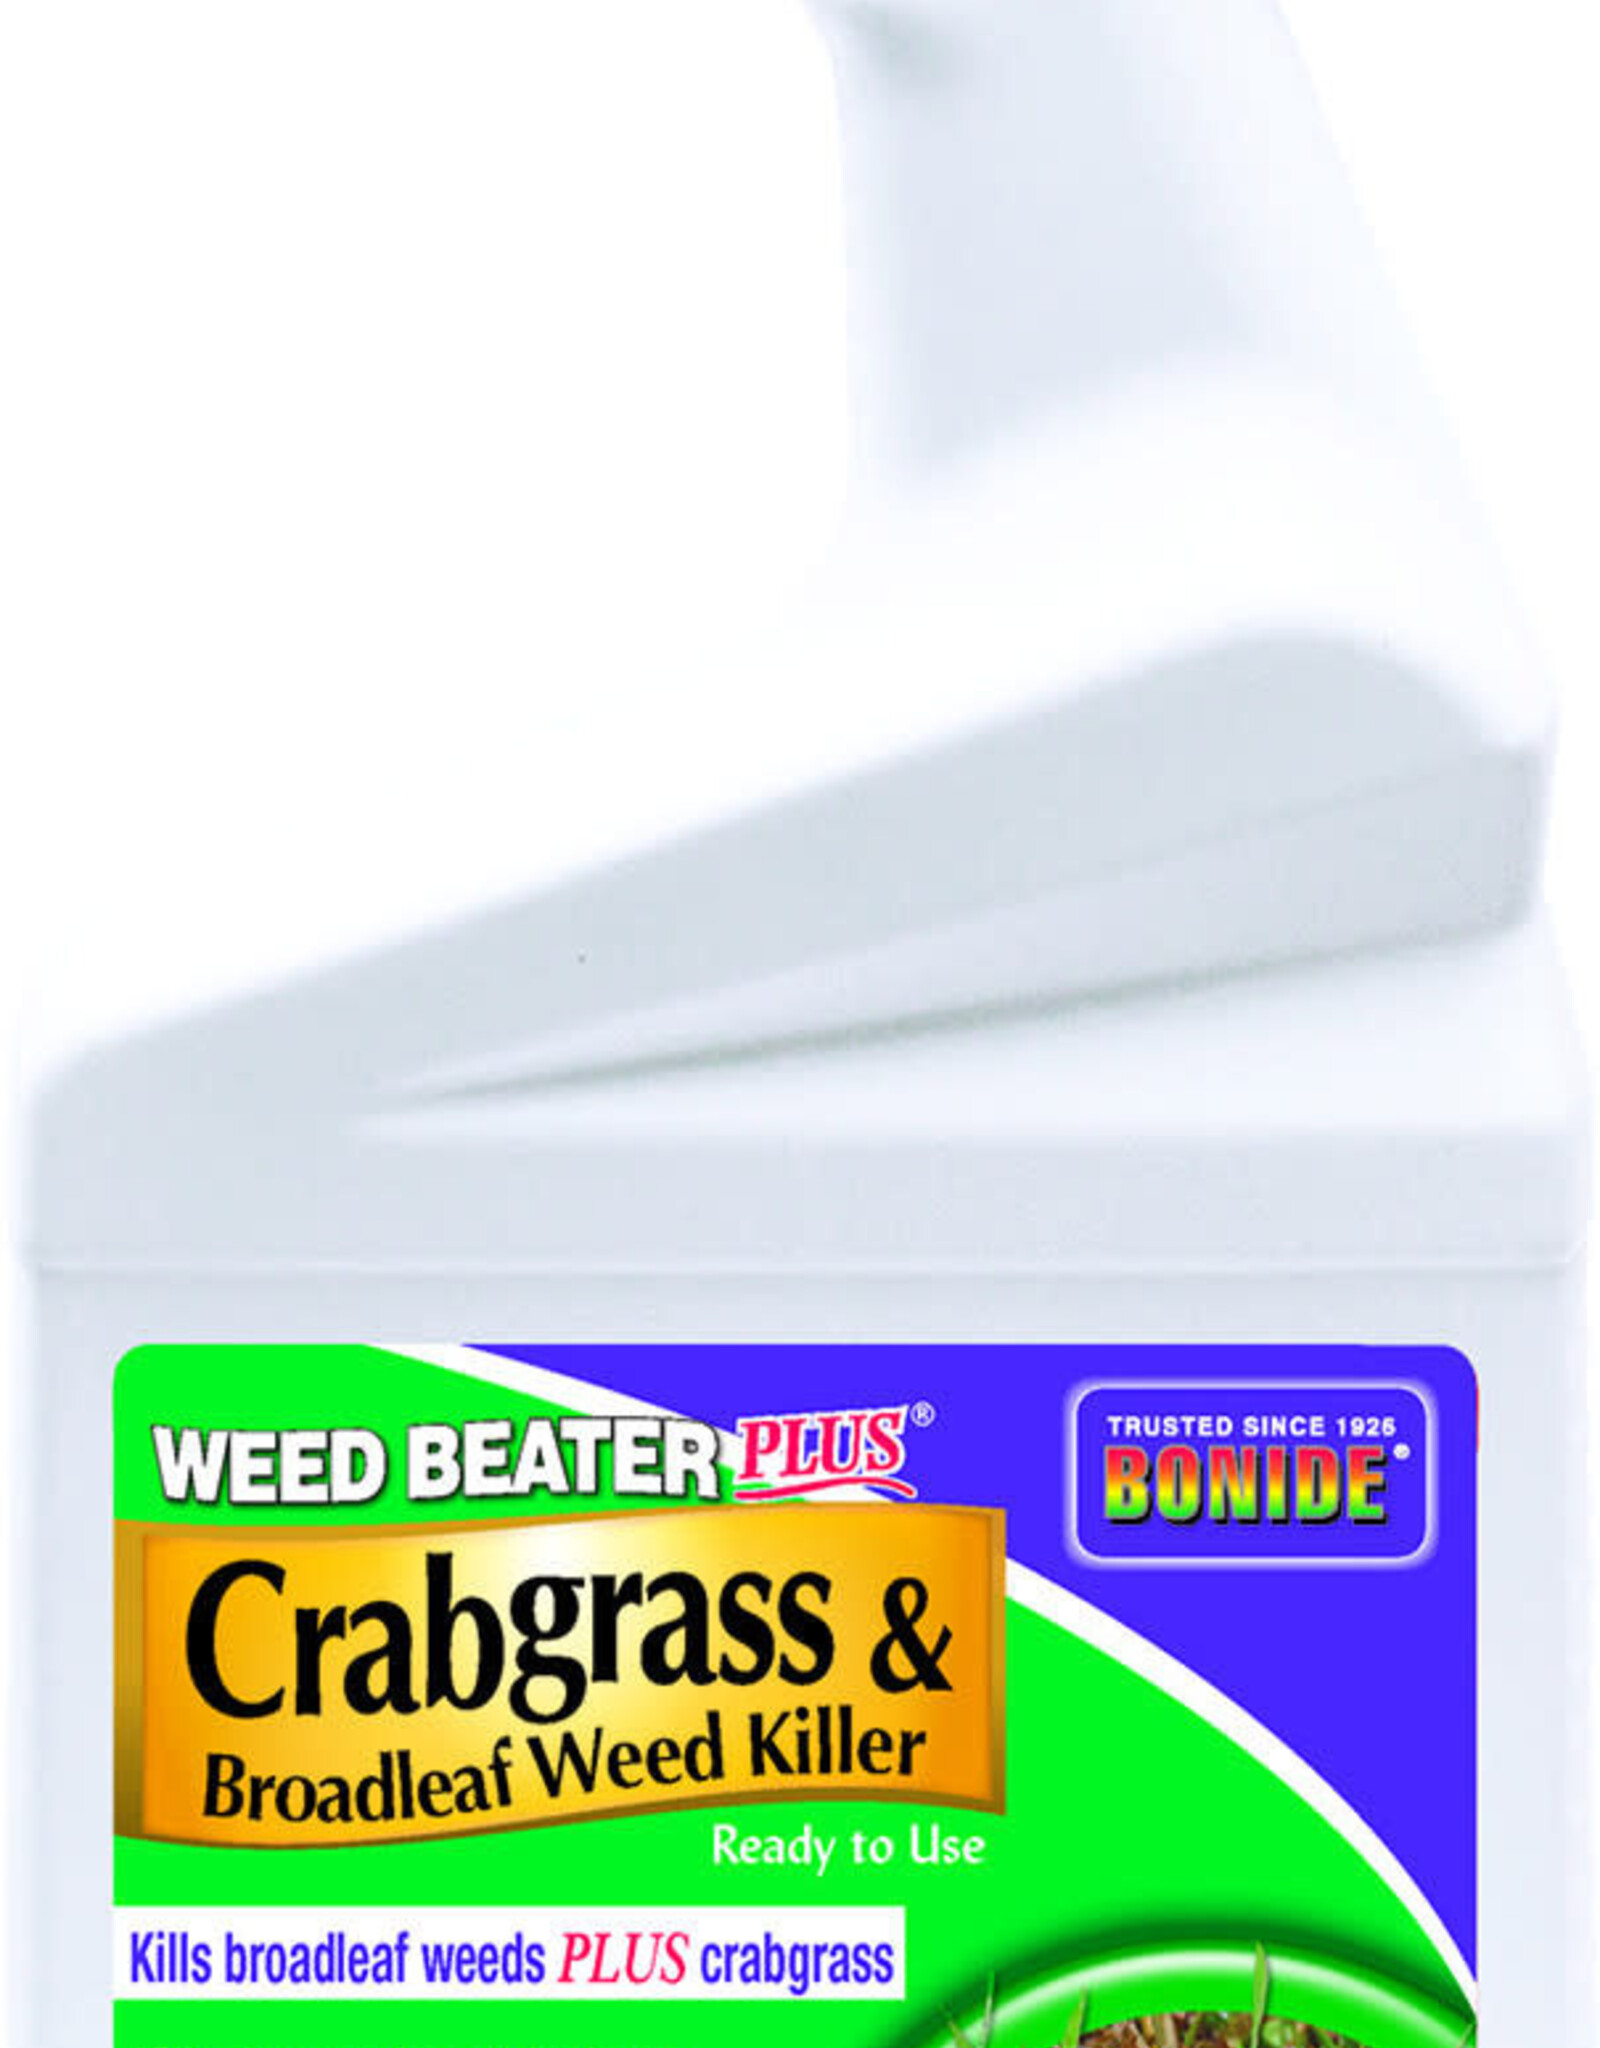 Bonide Weed Beater Plus Crabgrass RTU